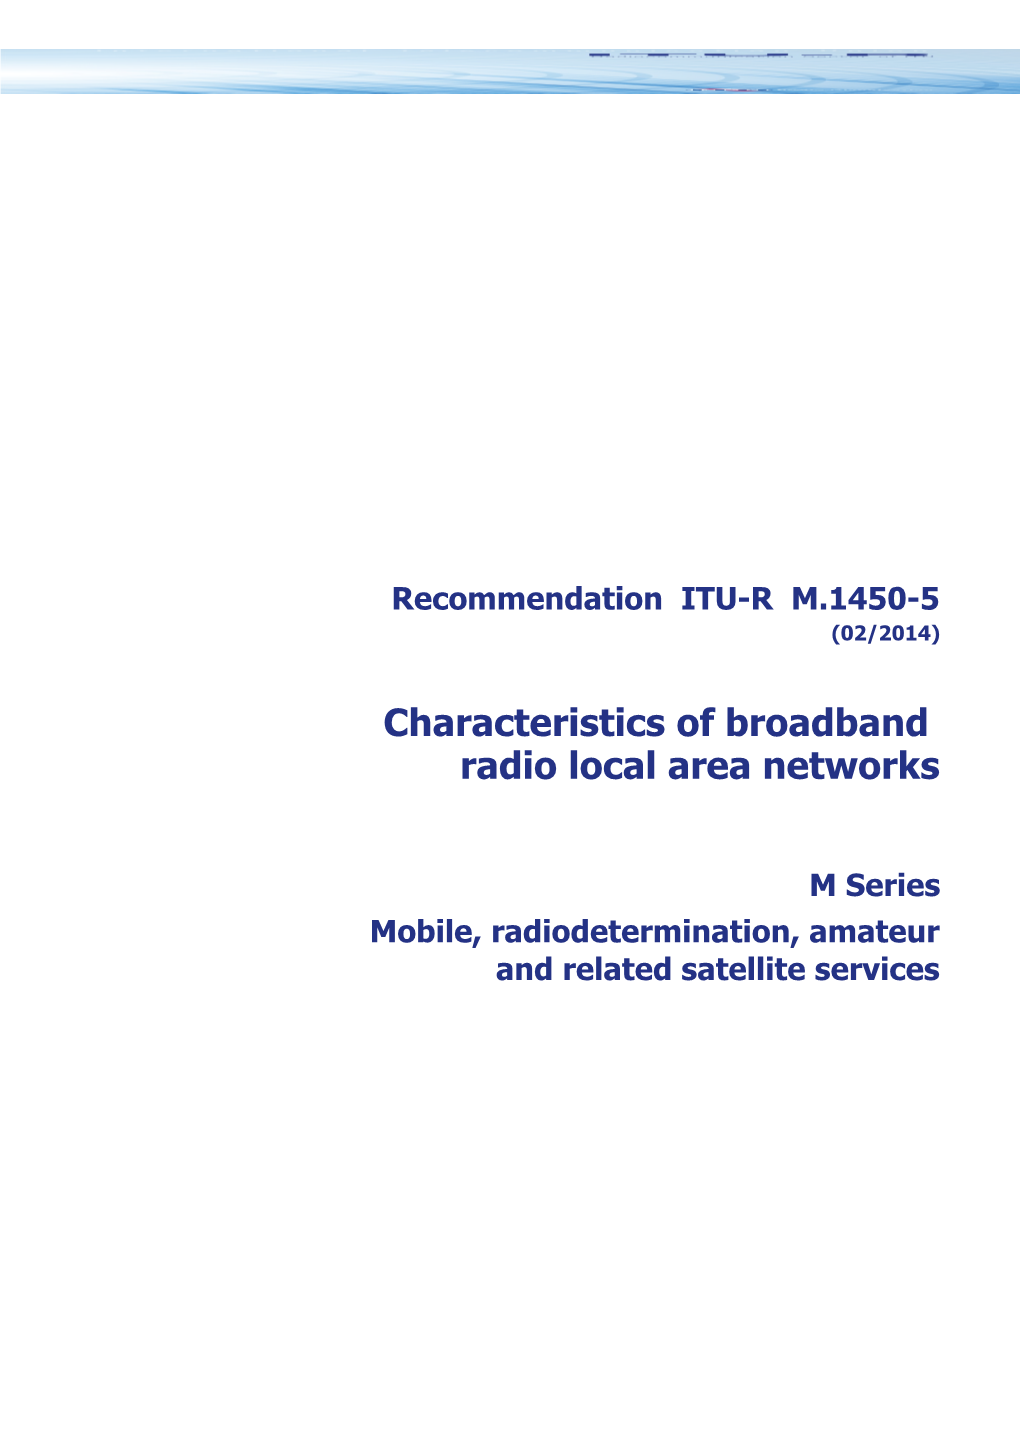 Characteristics of Broadband Radio Local Area Networks